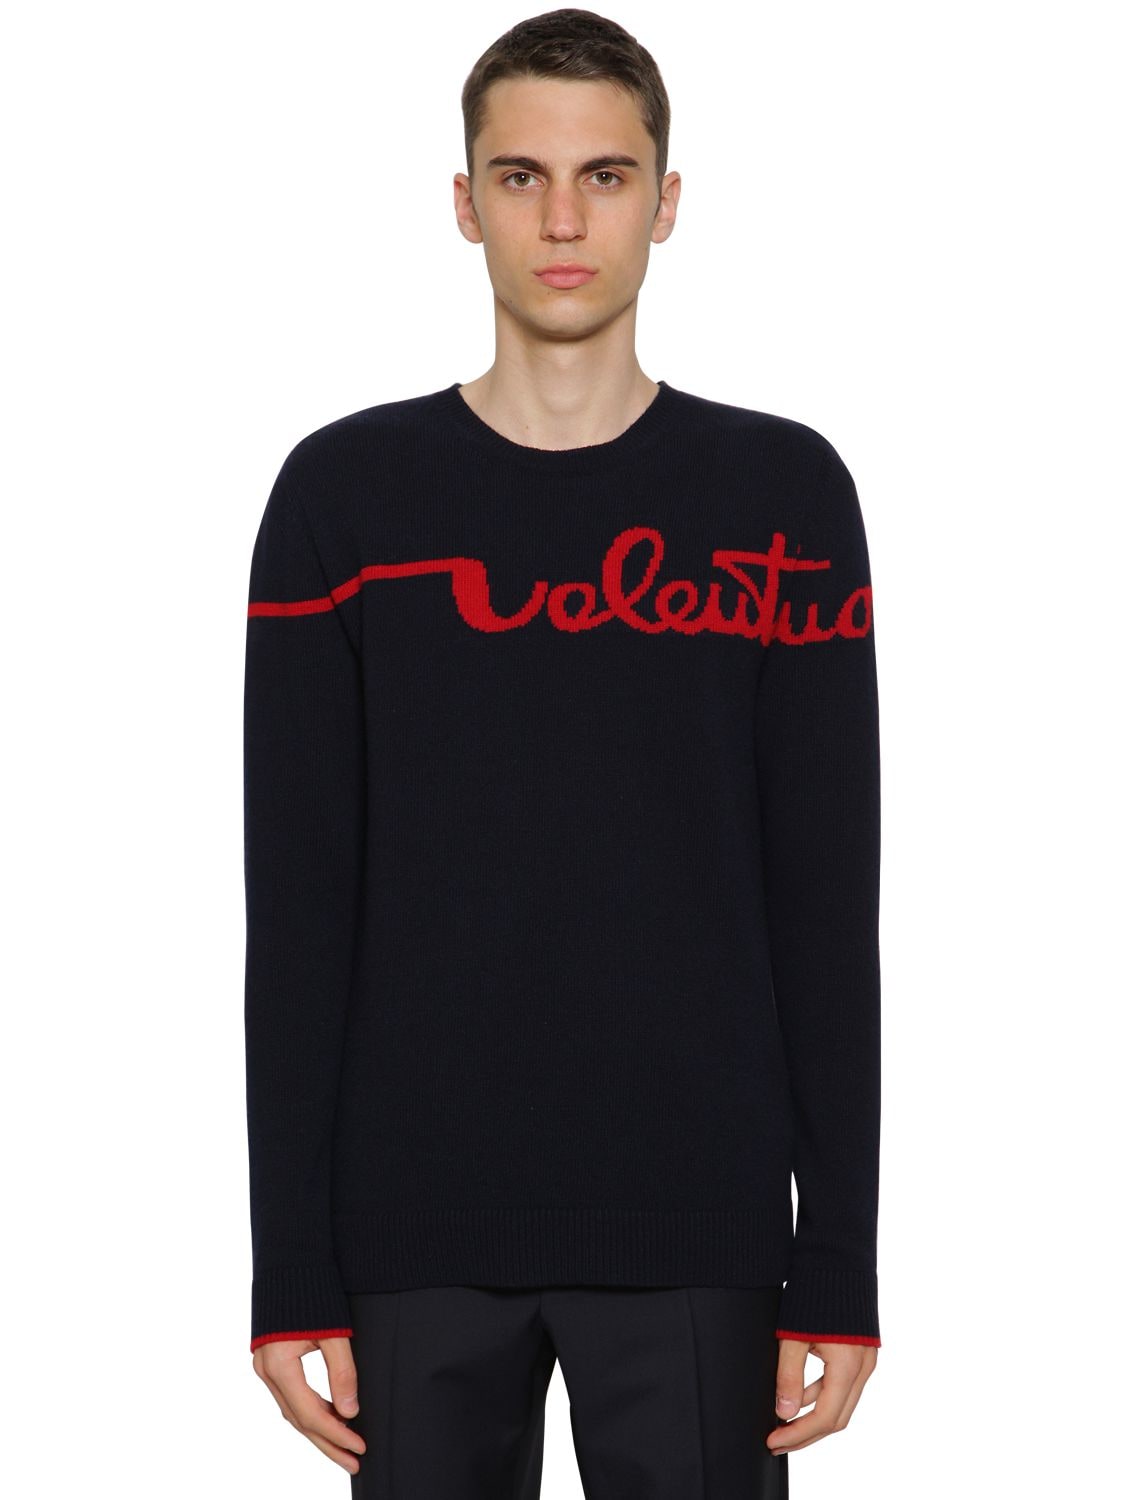 Jacquard Virgin Wool & Cashmere Sweater | The Fashionisto